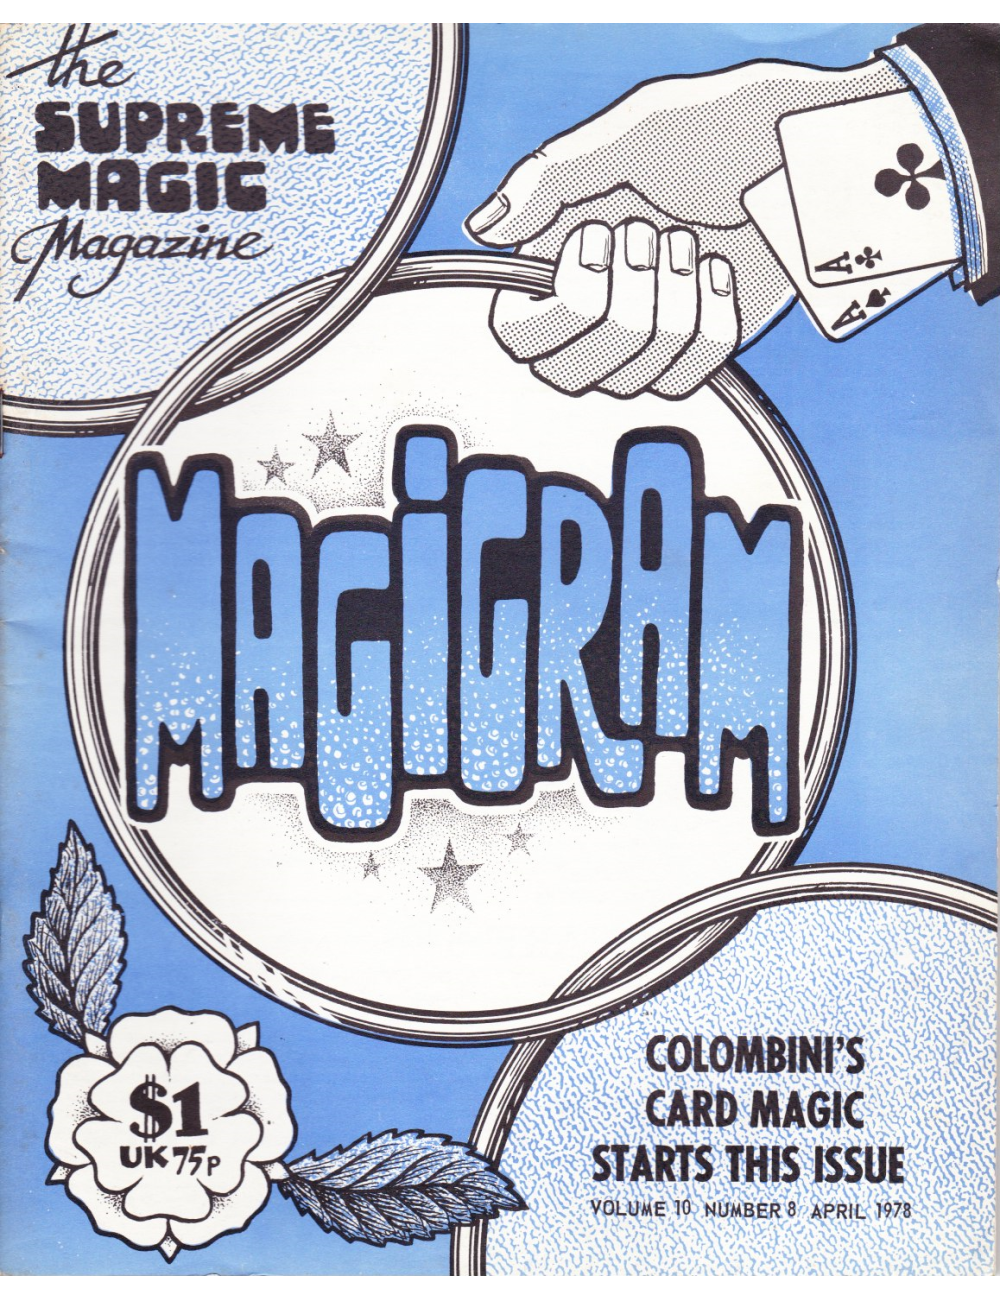 MAGIGRAM The Supreme Magic Magazine Volume 8, Number 6, April 1978